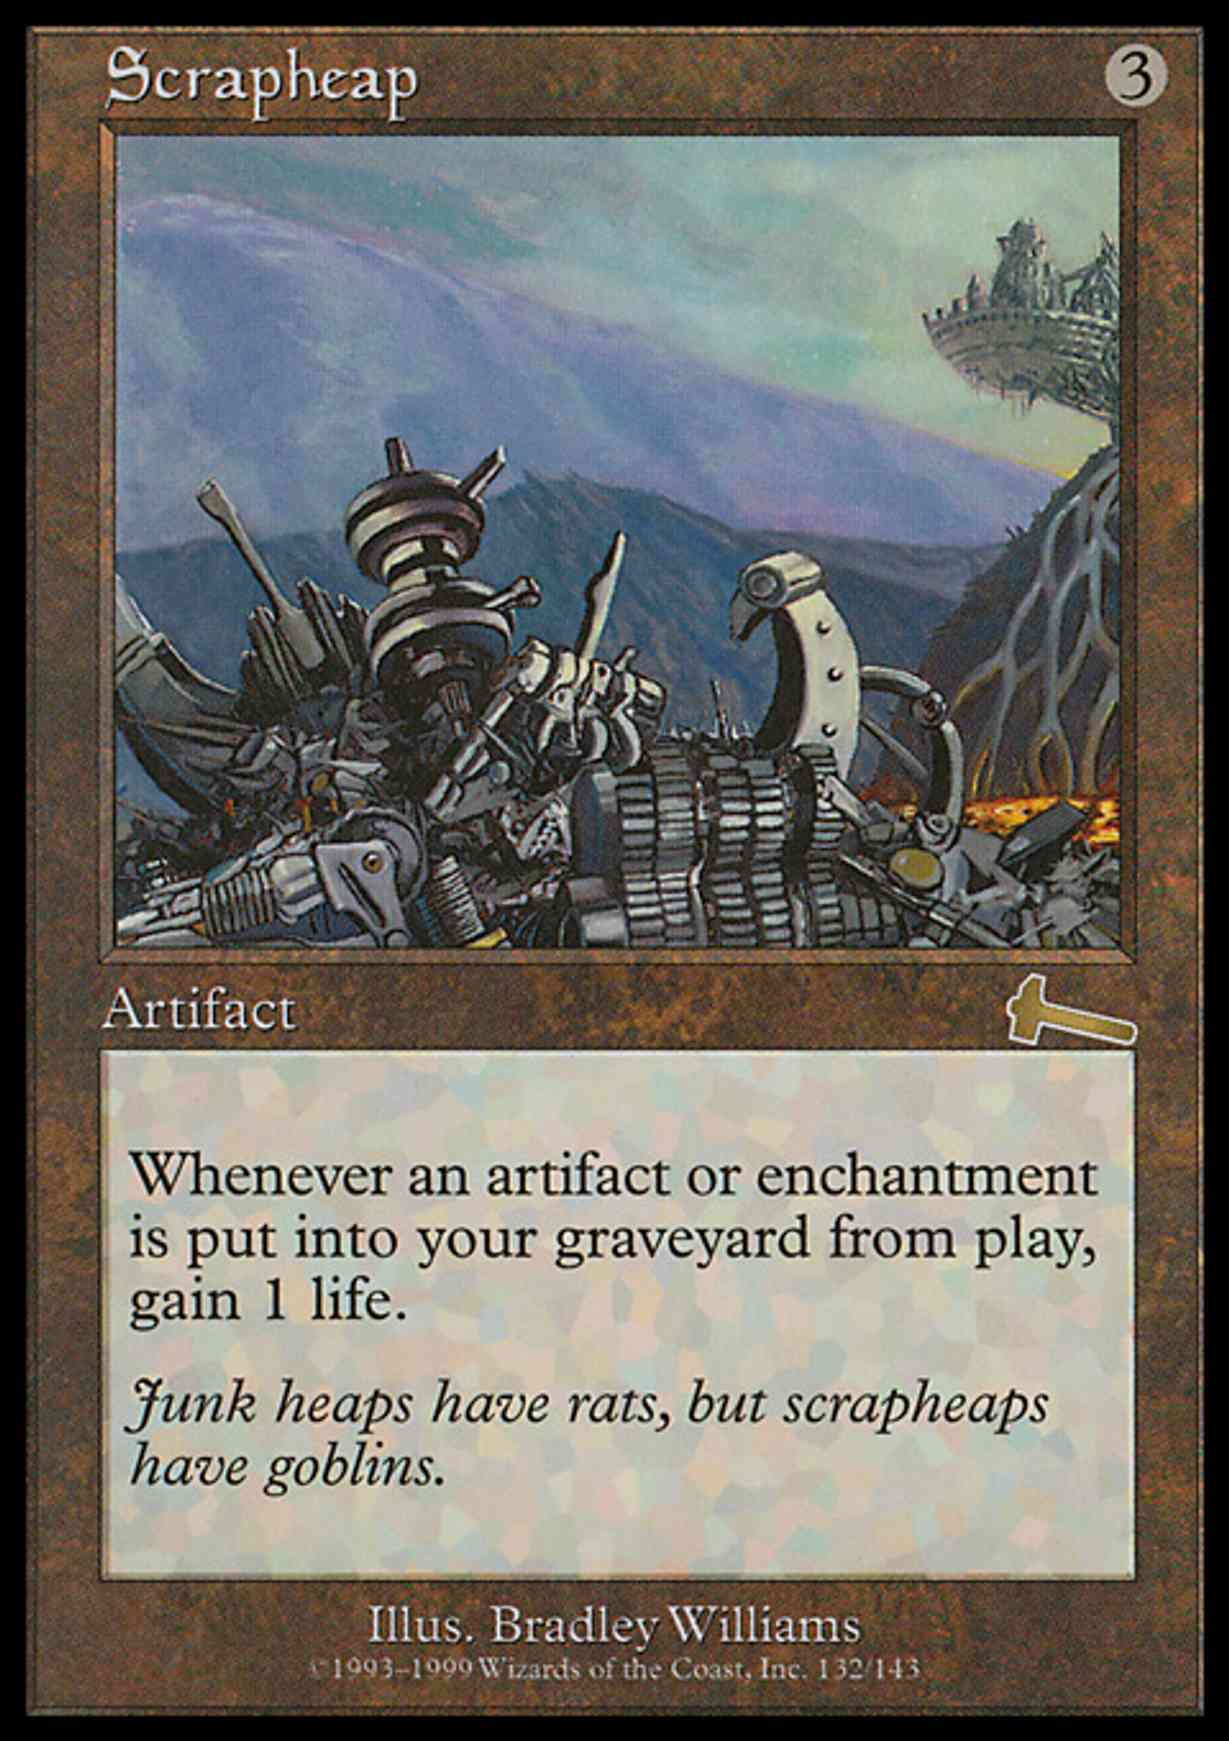 Scrapheap magic card front